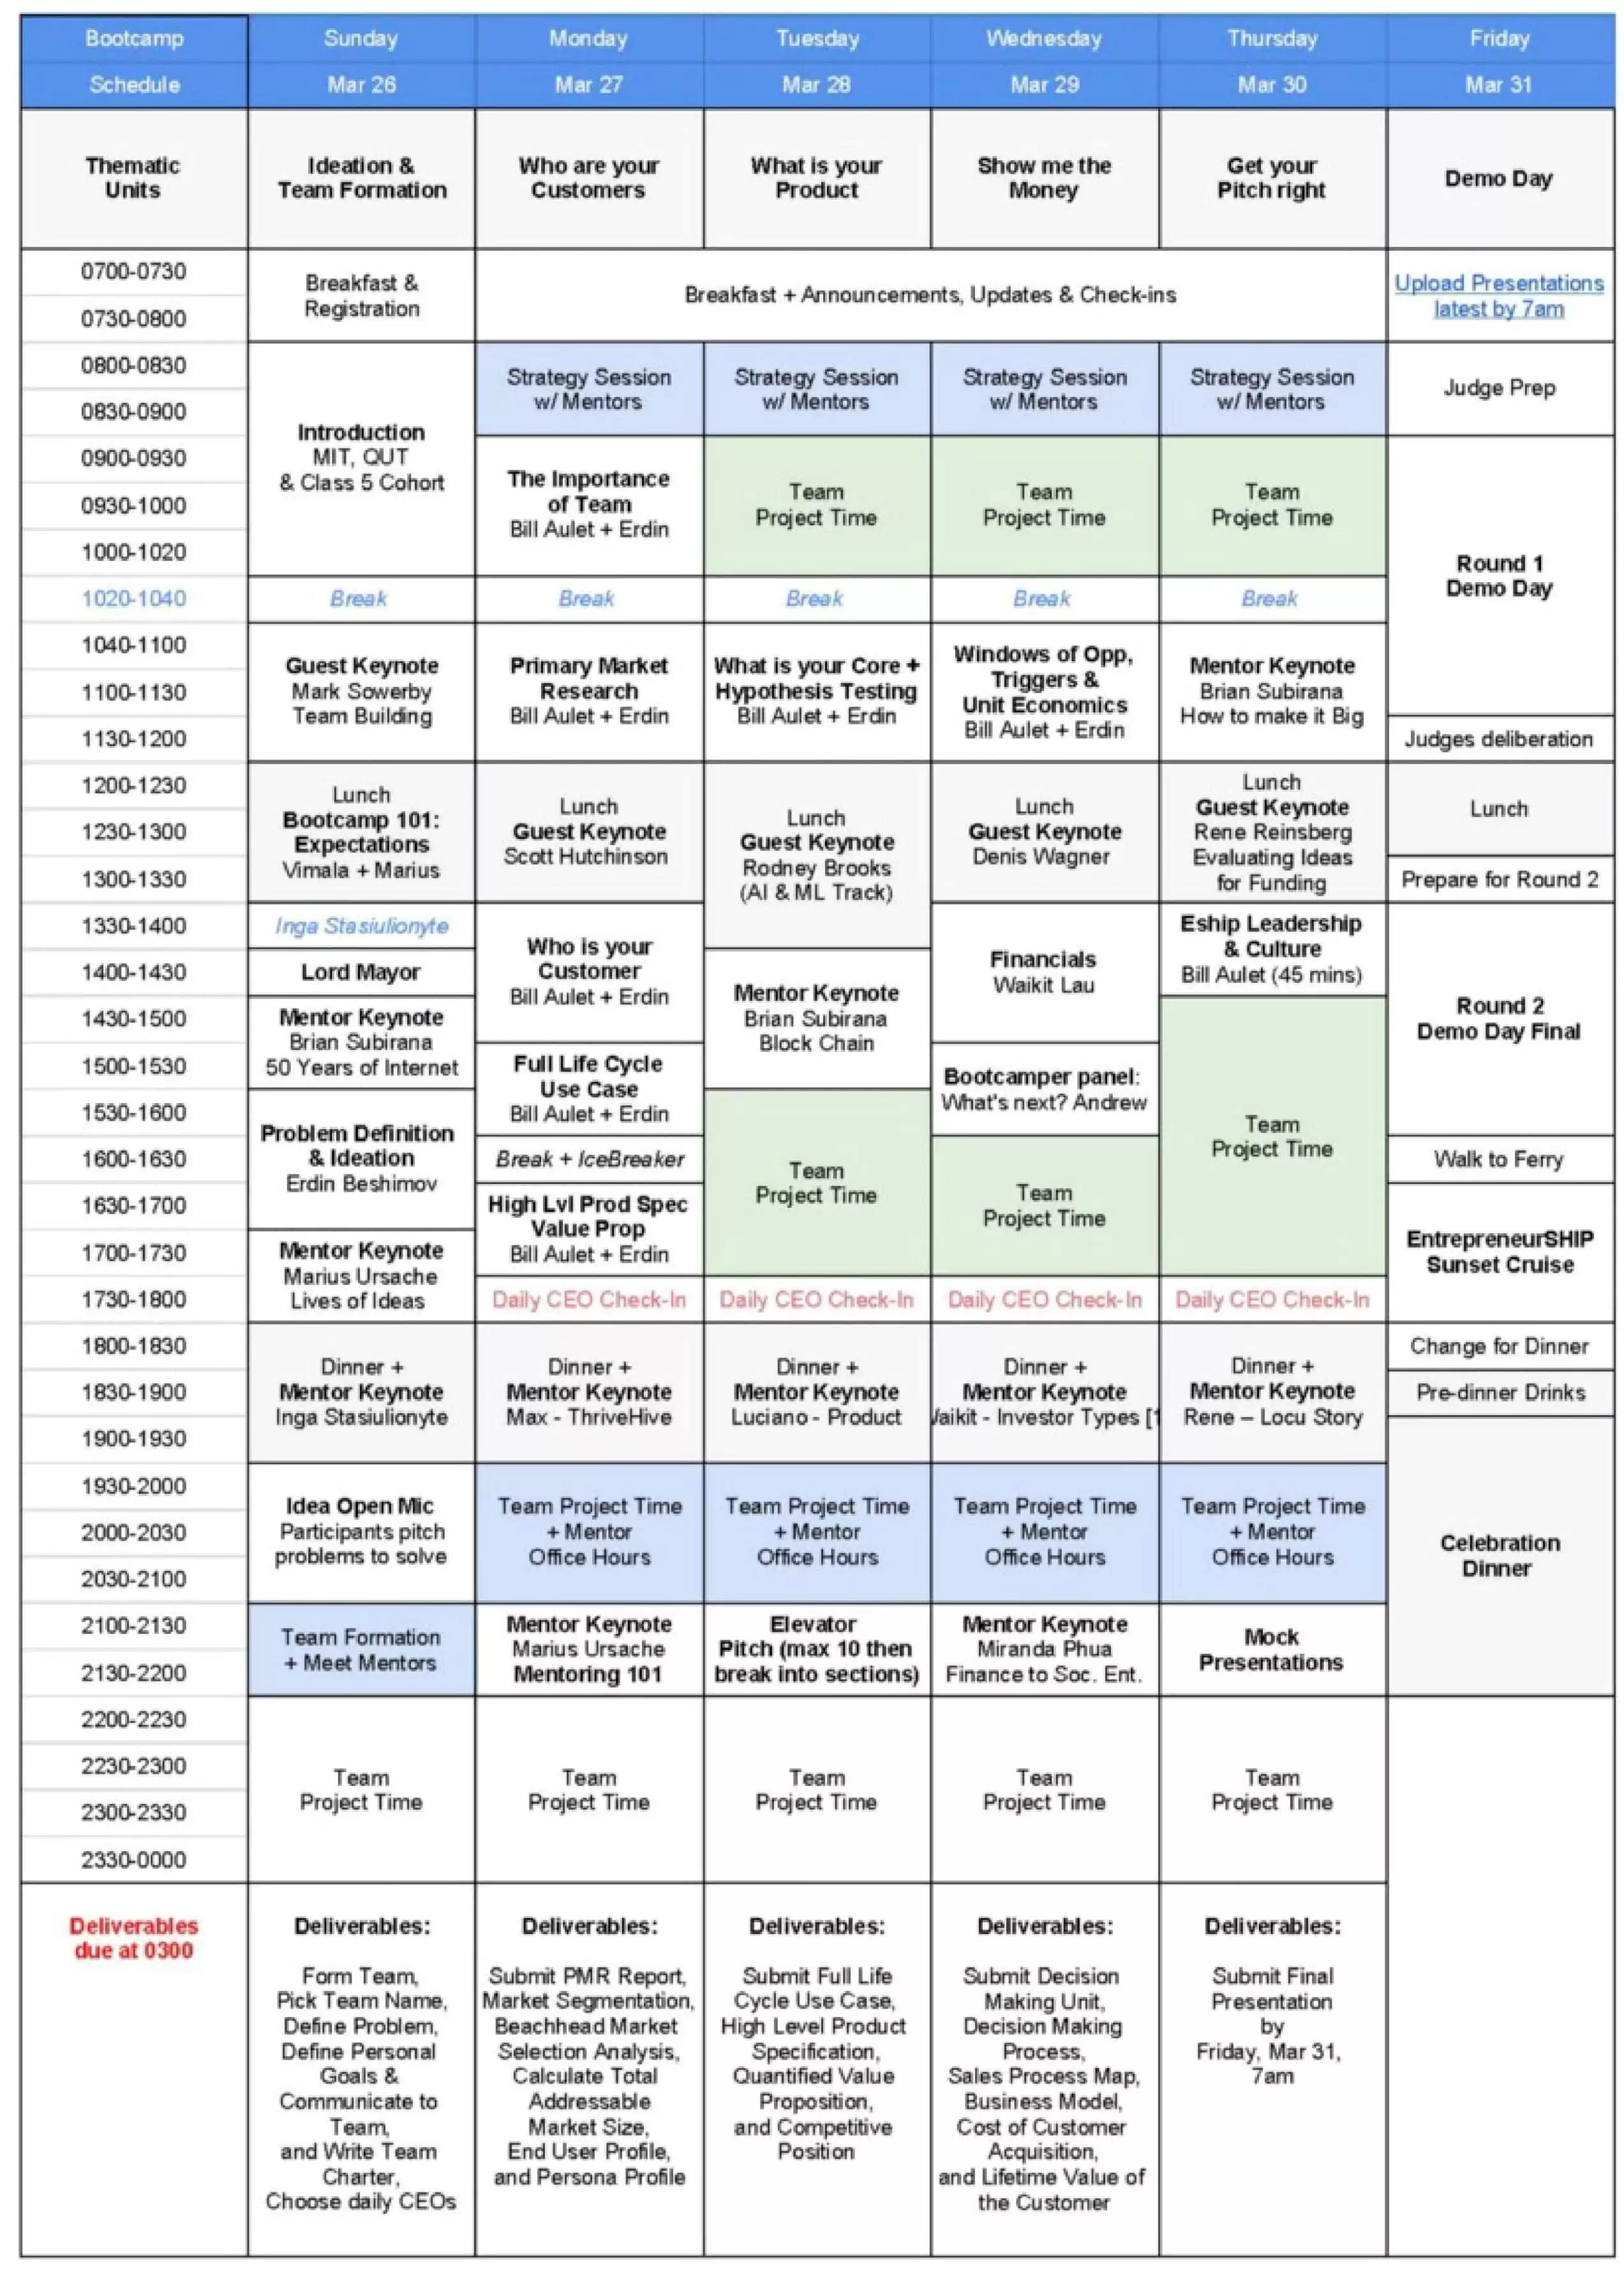 MIT Global Entrepreneurship 2017 - Bootcamp Schedule